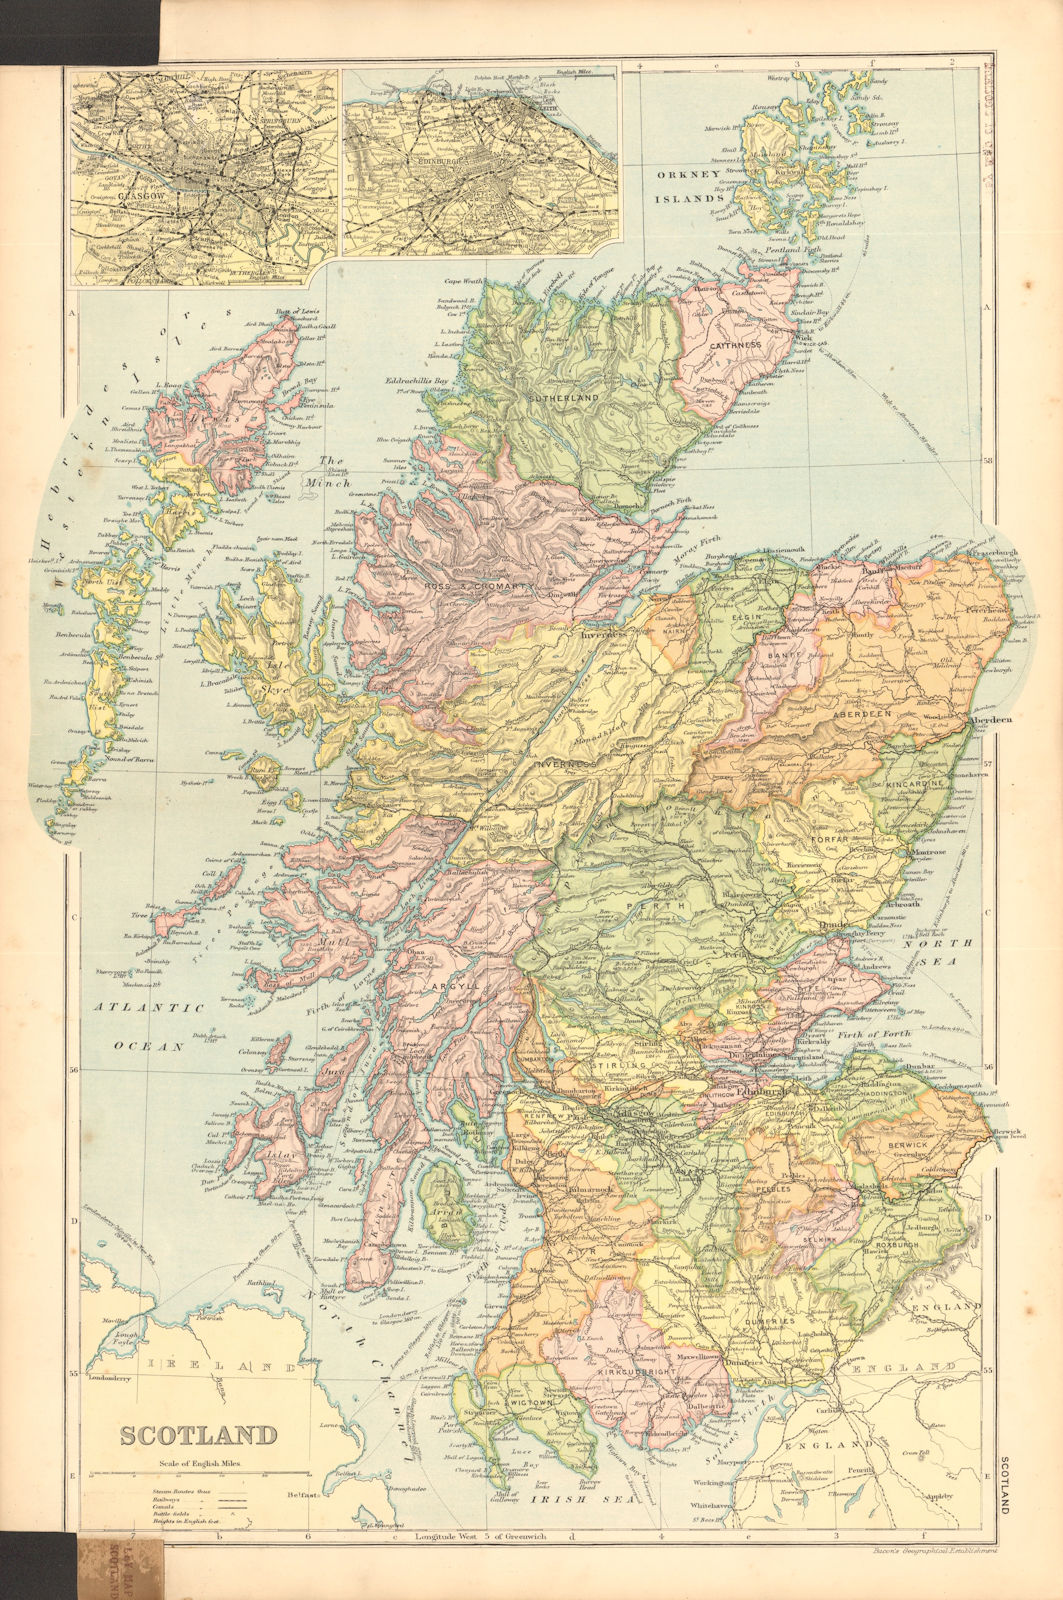 SCOTLAND. Edinburgh Glasgow environs. Counties. Railways. BACON 1904 old map